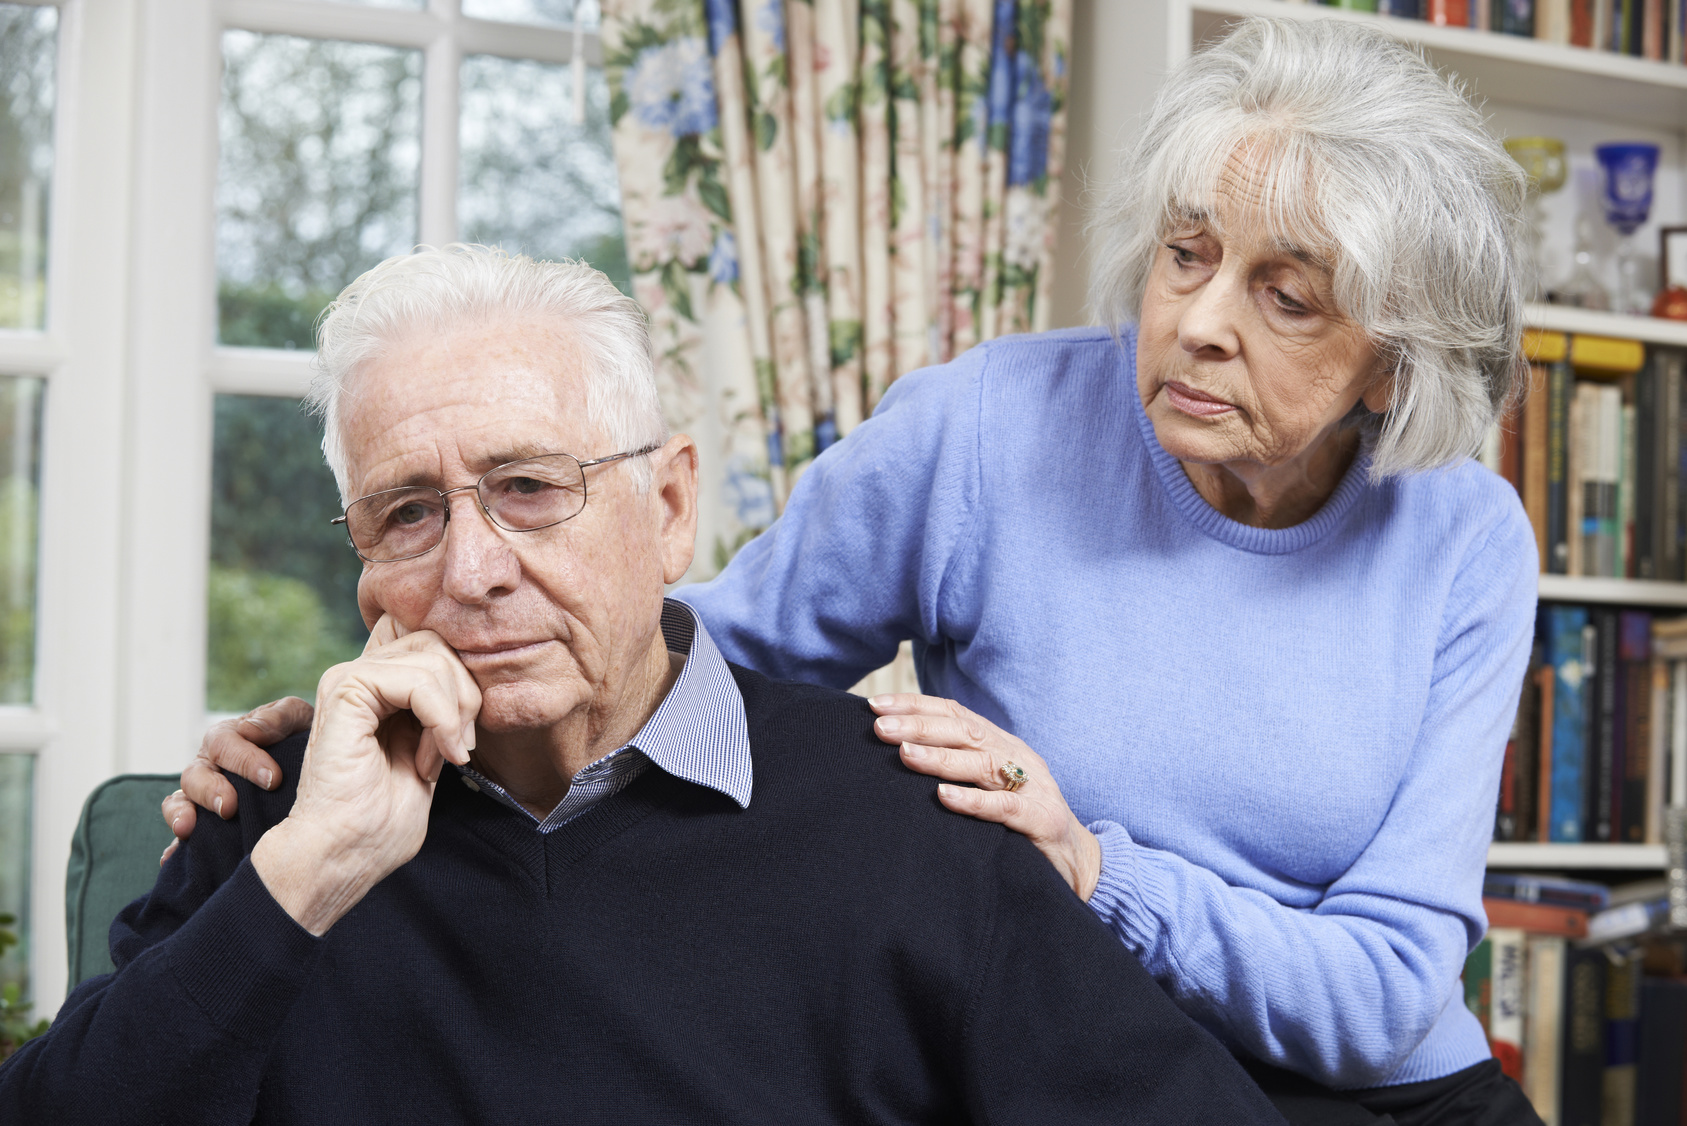 Woman Comforting Senior Man With Depression